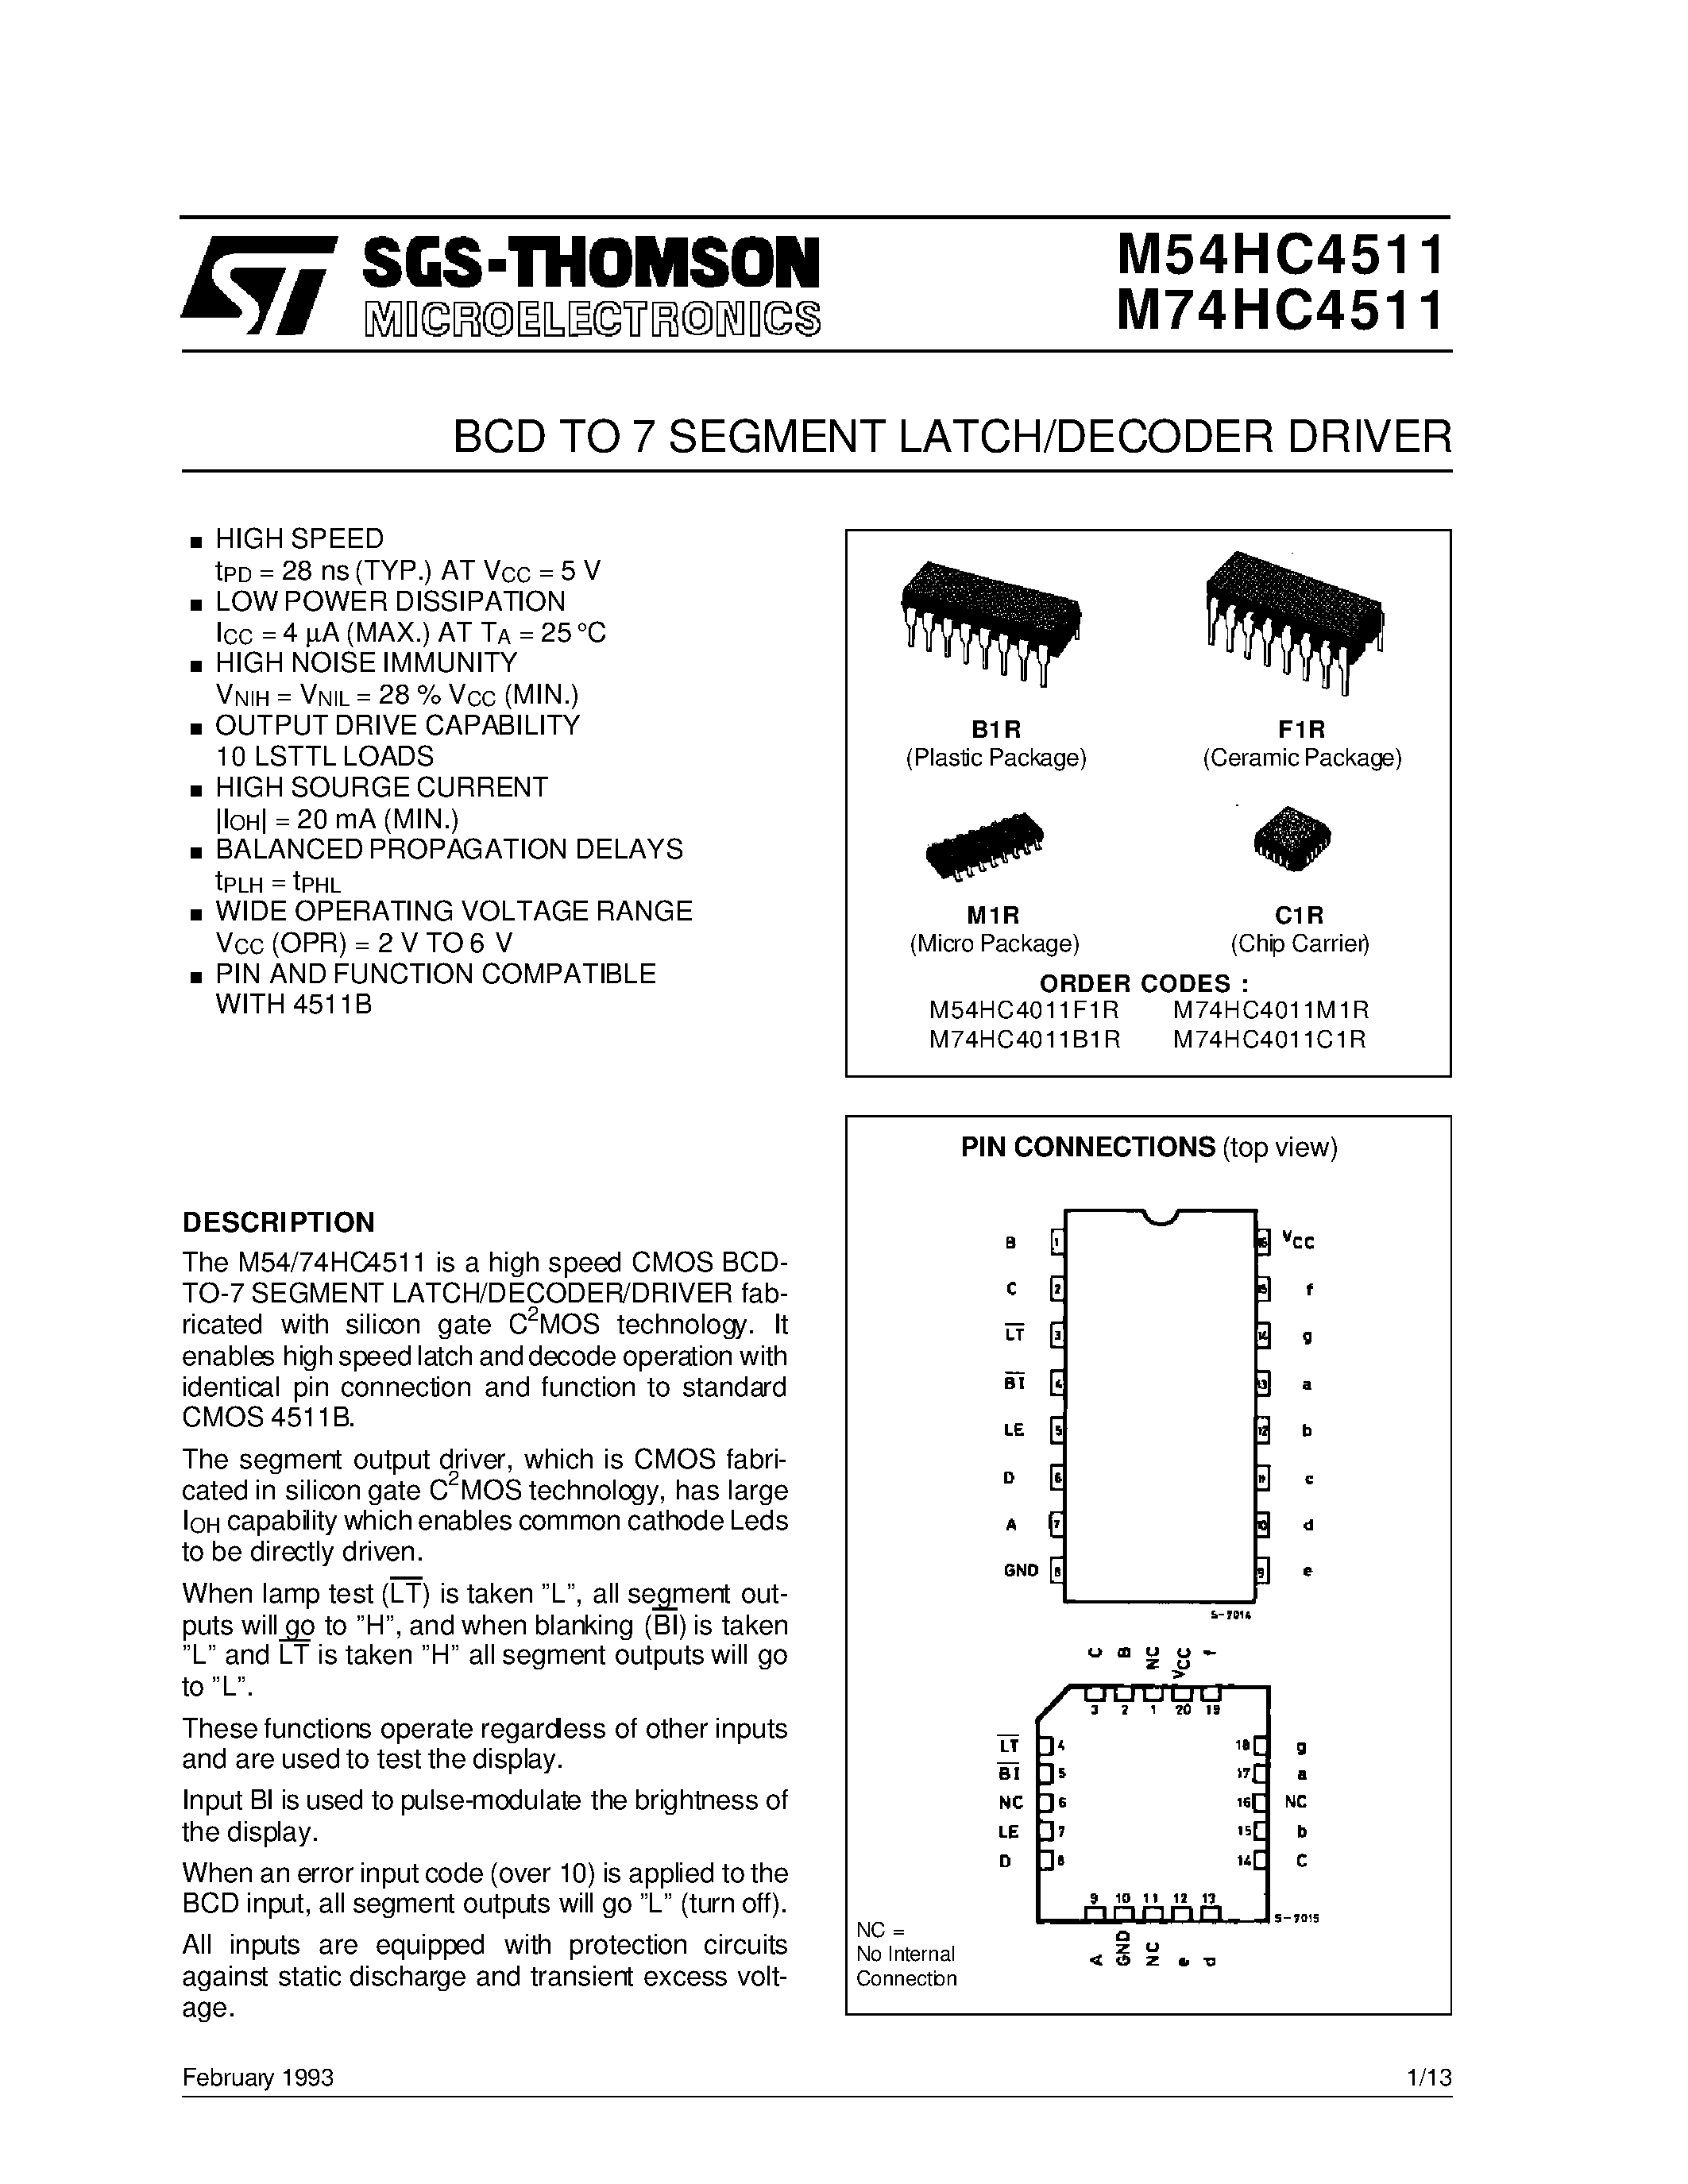 Datasheet M74HC4011B1R - BCD TO 7 SEGMENT LATCH/DECODER DRIVER page 1